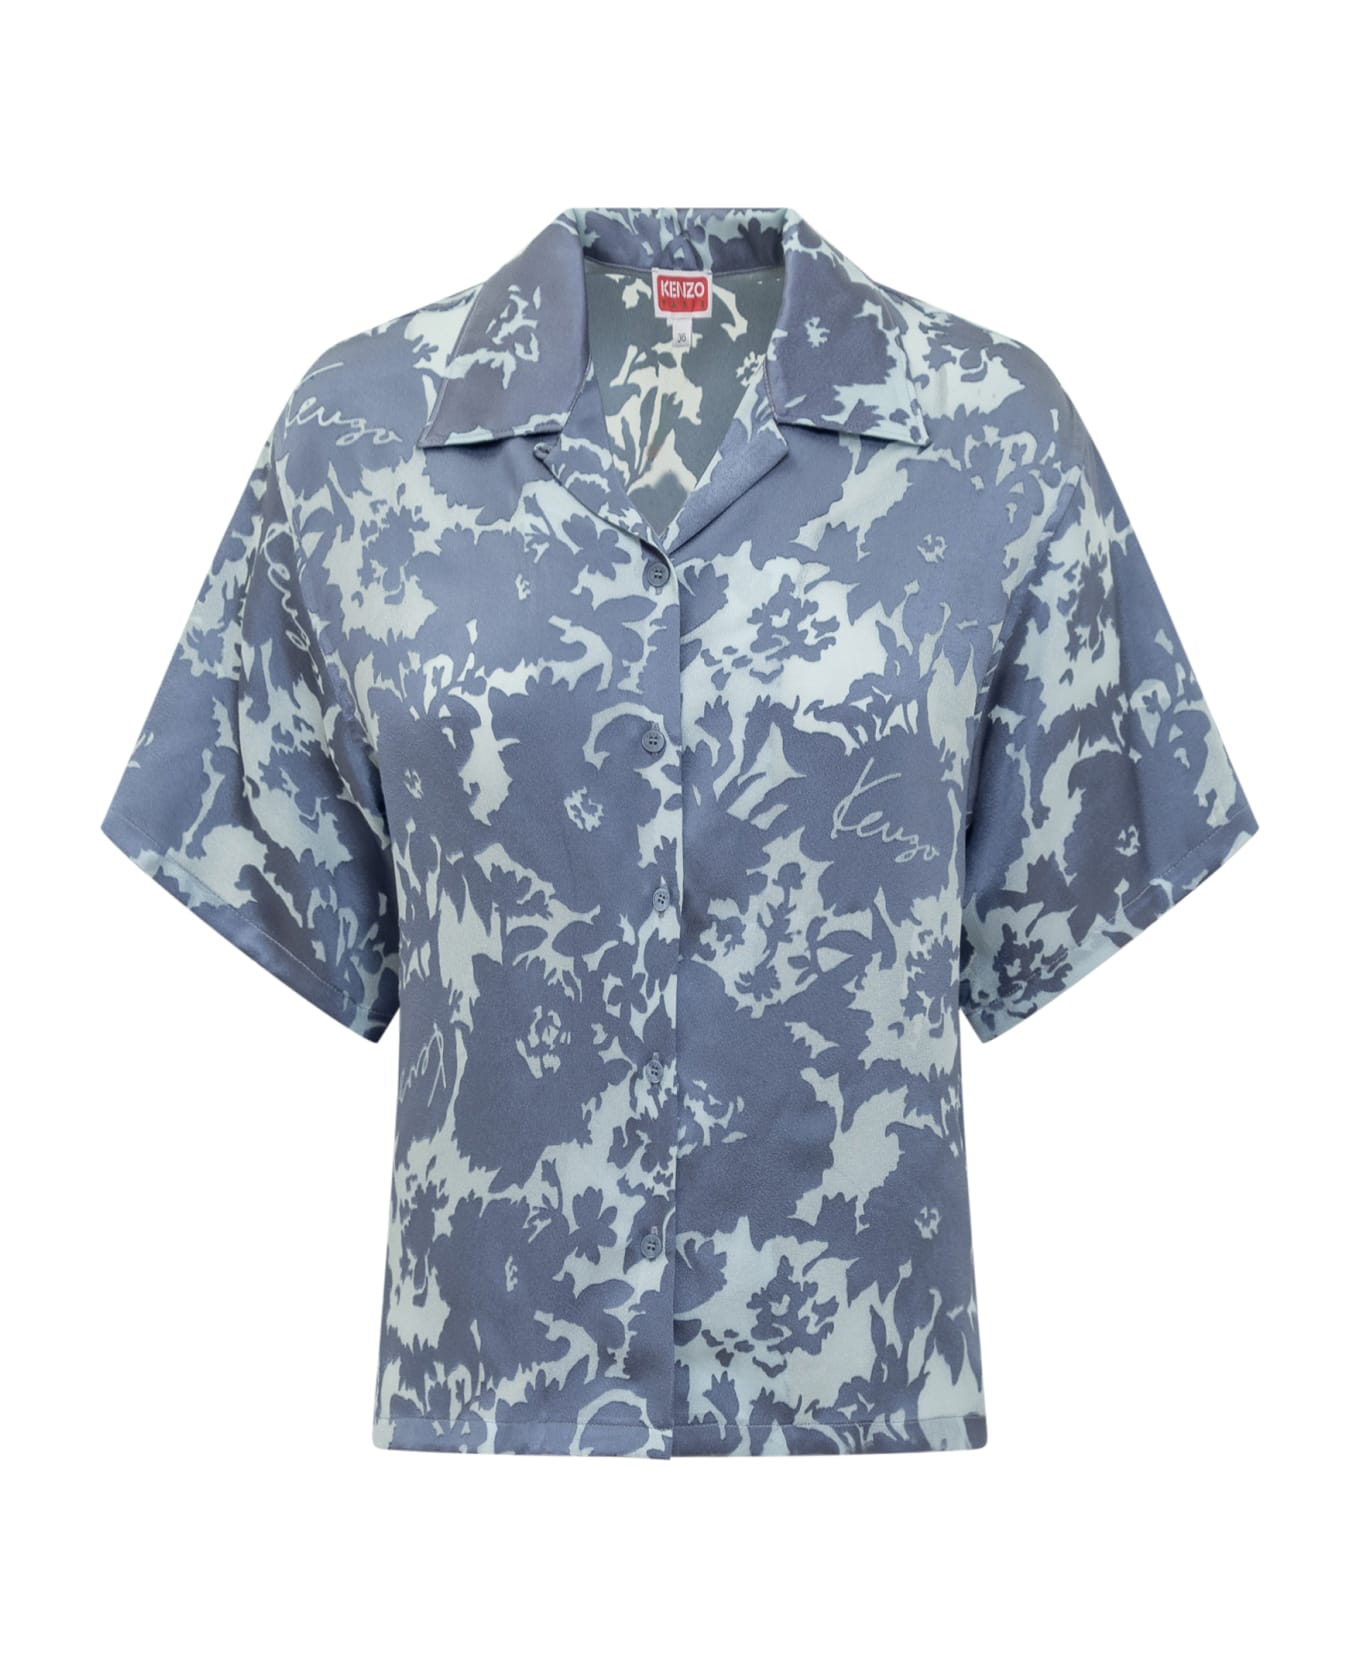 Kenzo Shirt With Flower Camo Pattern - BLUE